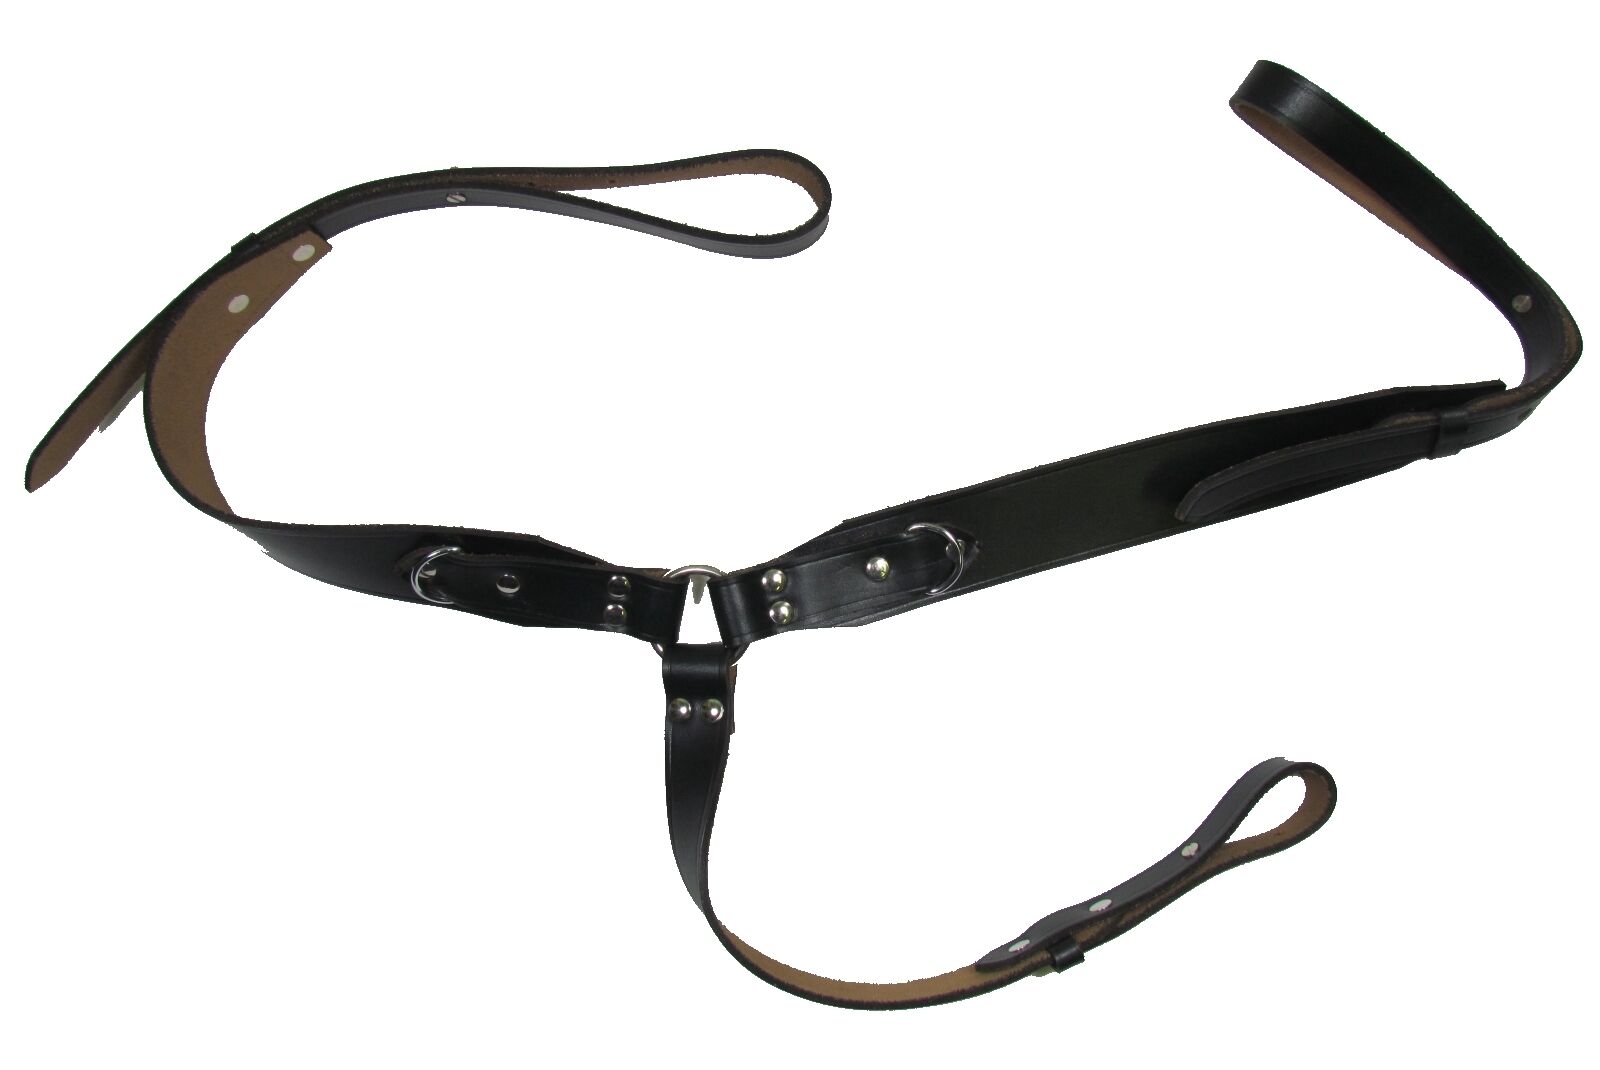 Braces Vintage Shoulder Harness, Army Suspenders Braces Black leather R1643